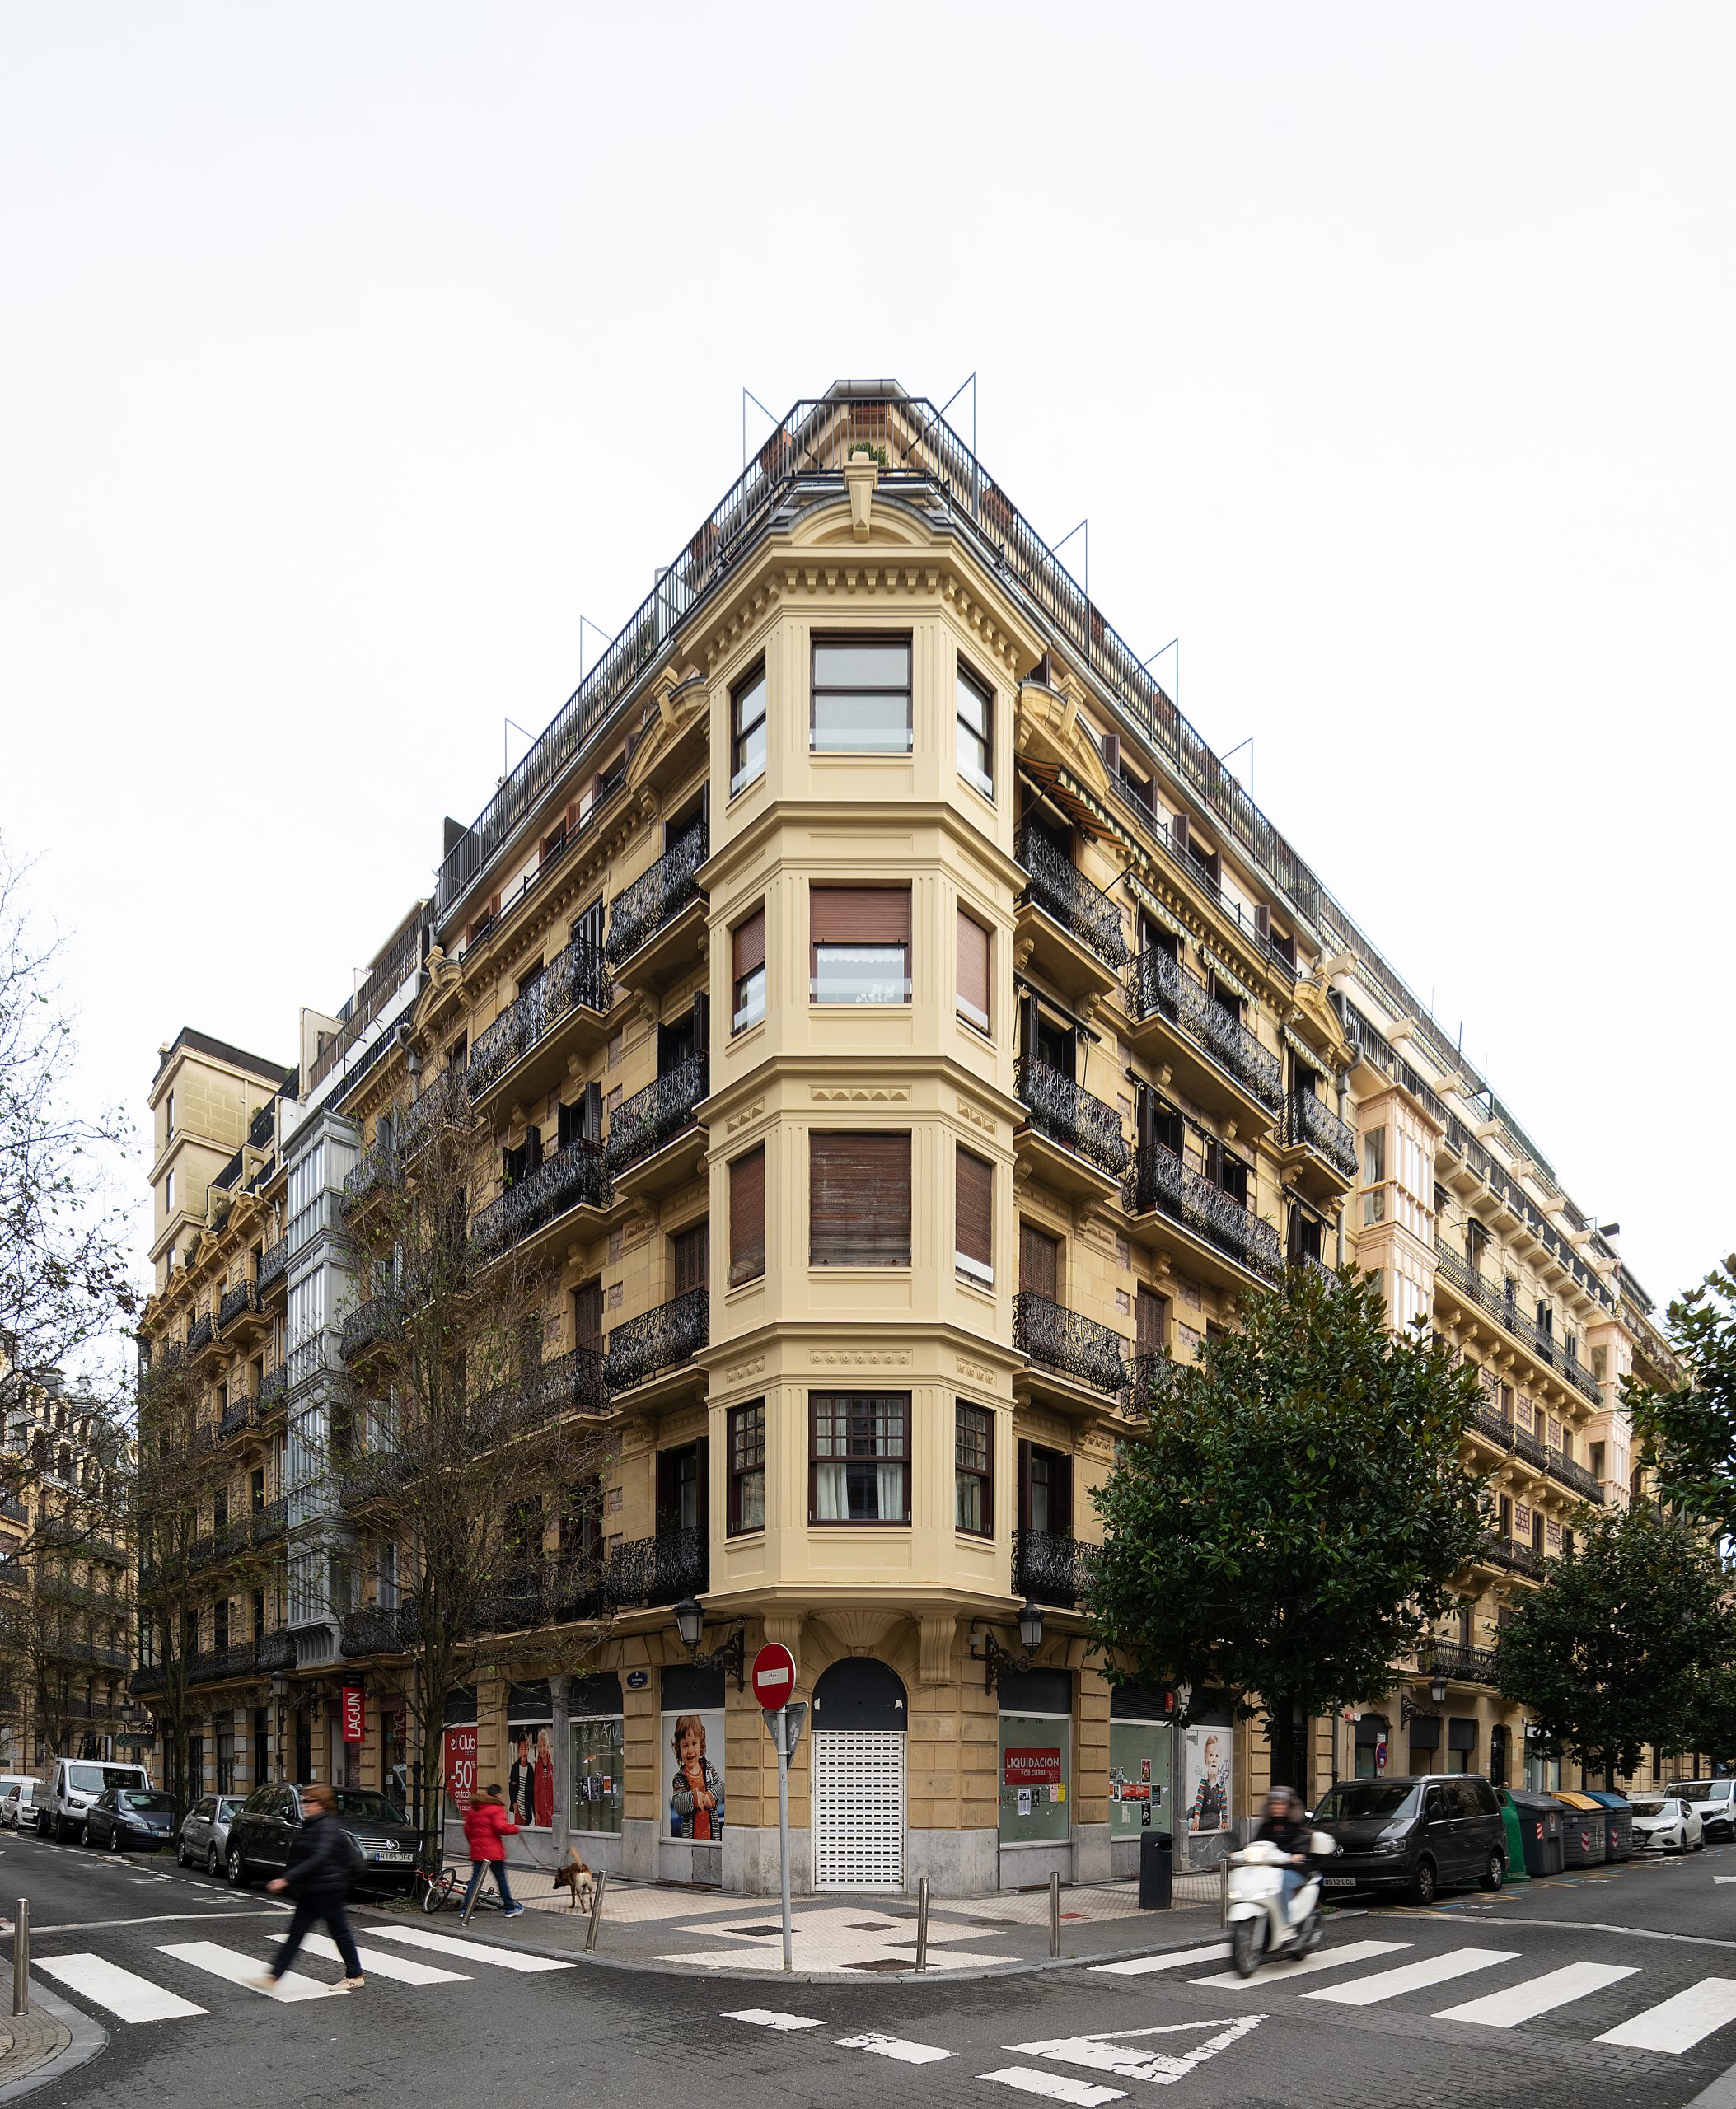 Rehabilitacion-fachada_piedra-arenisca_barandillas_reforma-fachada-tradicional_BASA-Arquitectura_3